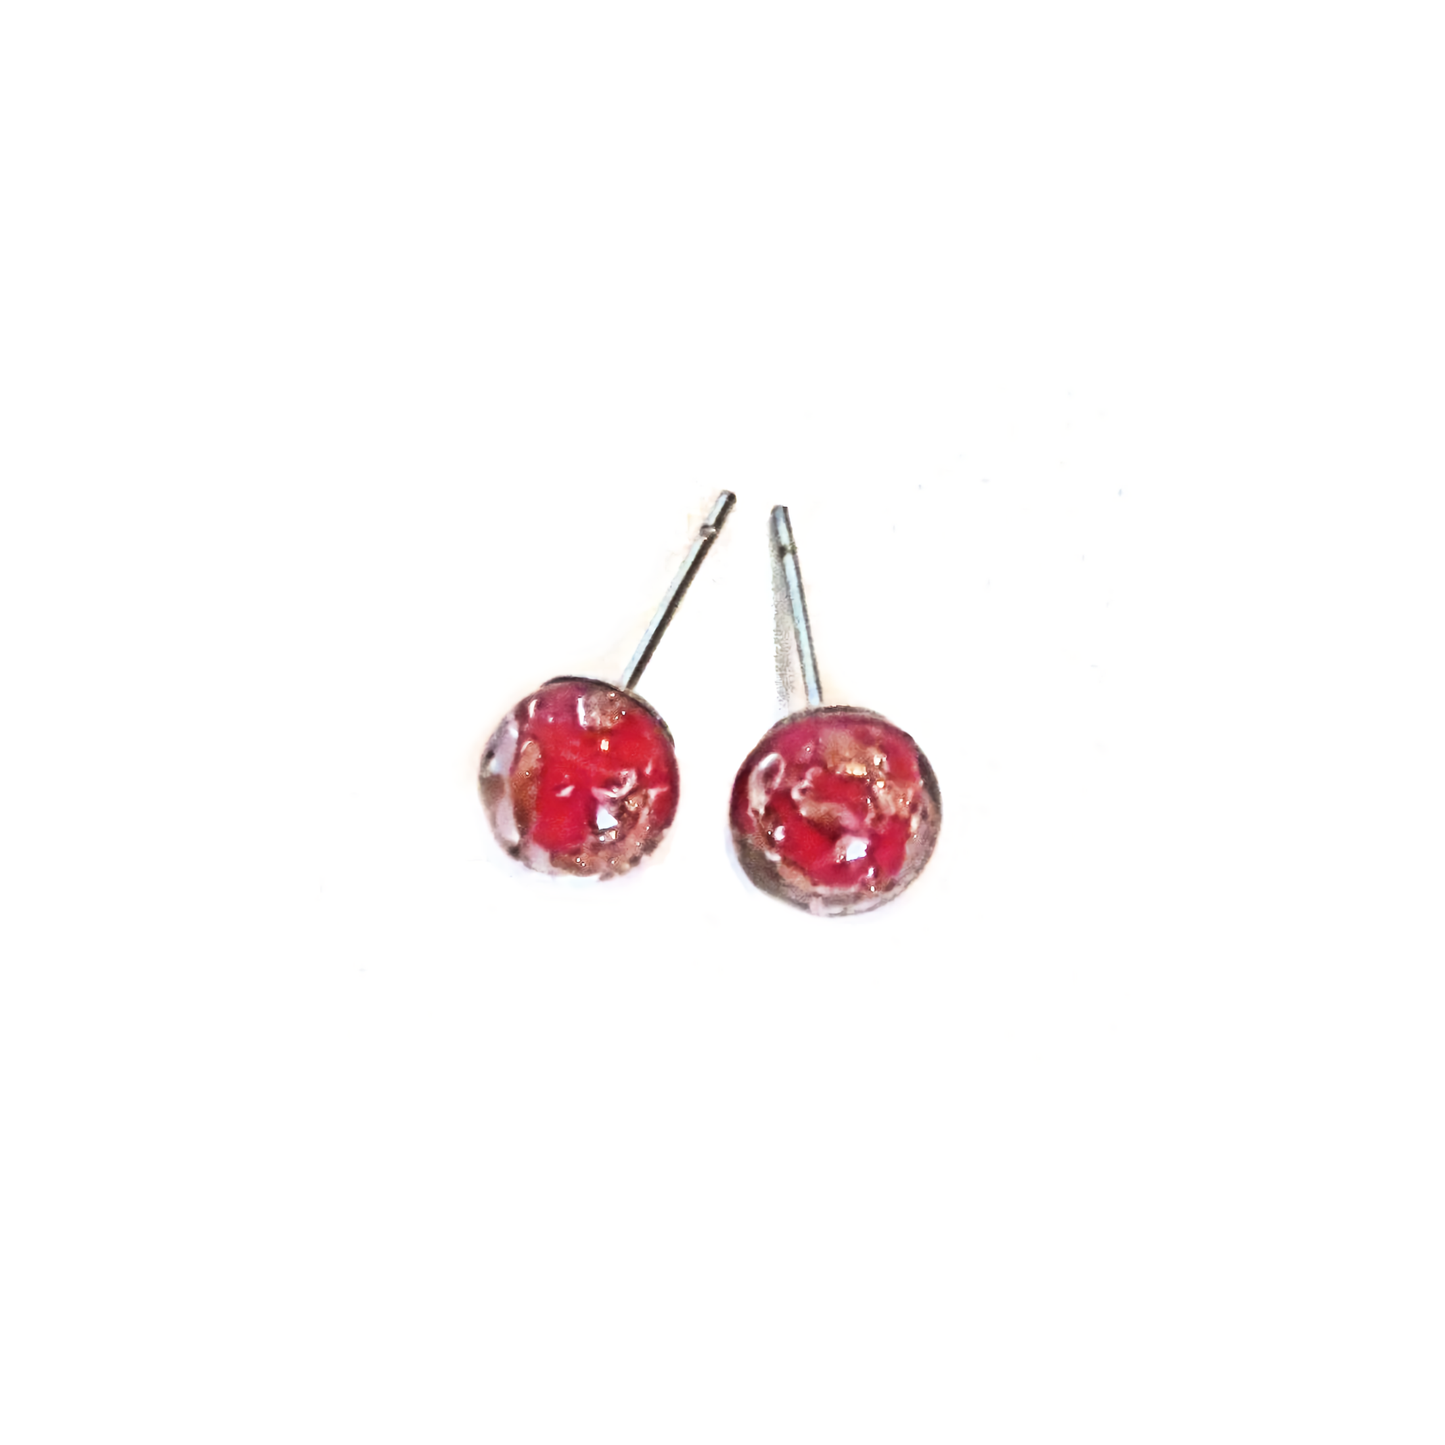 Murano Red Copper Ball Post  Earrings, Studs